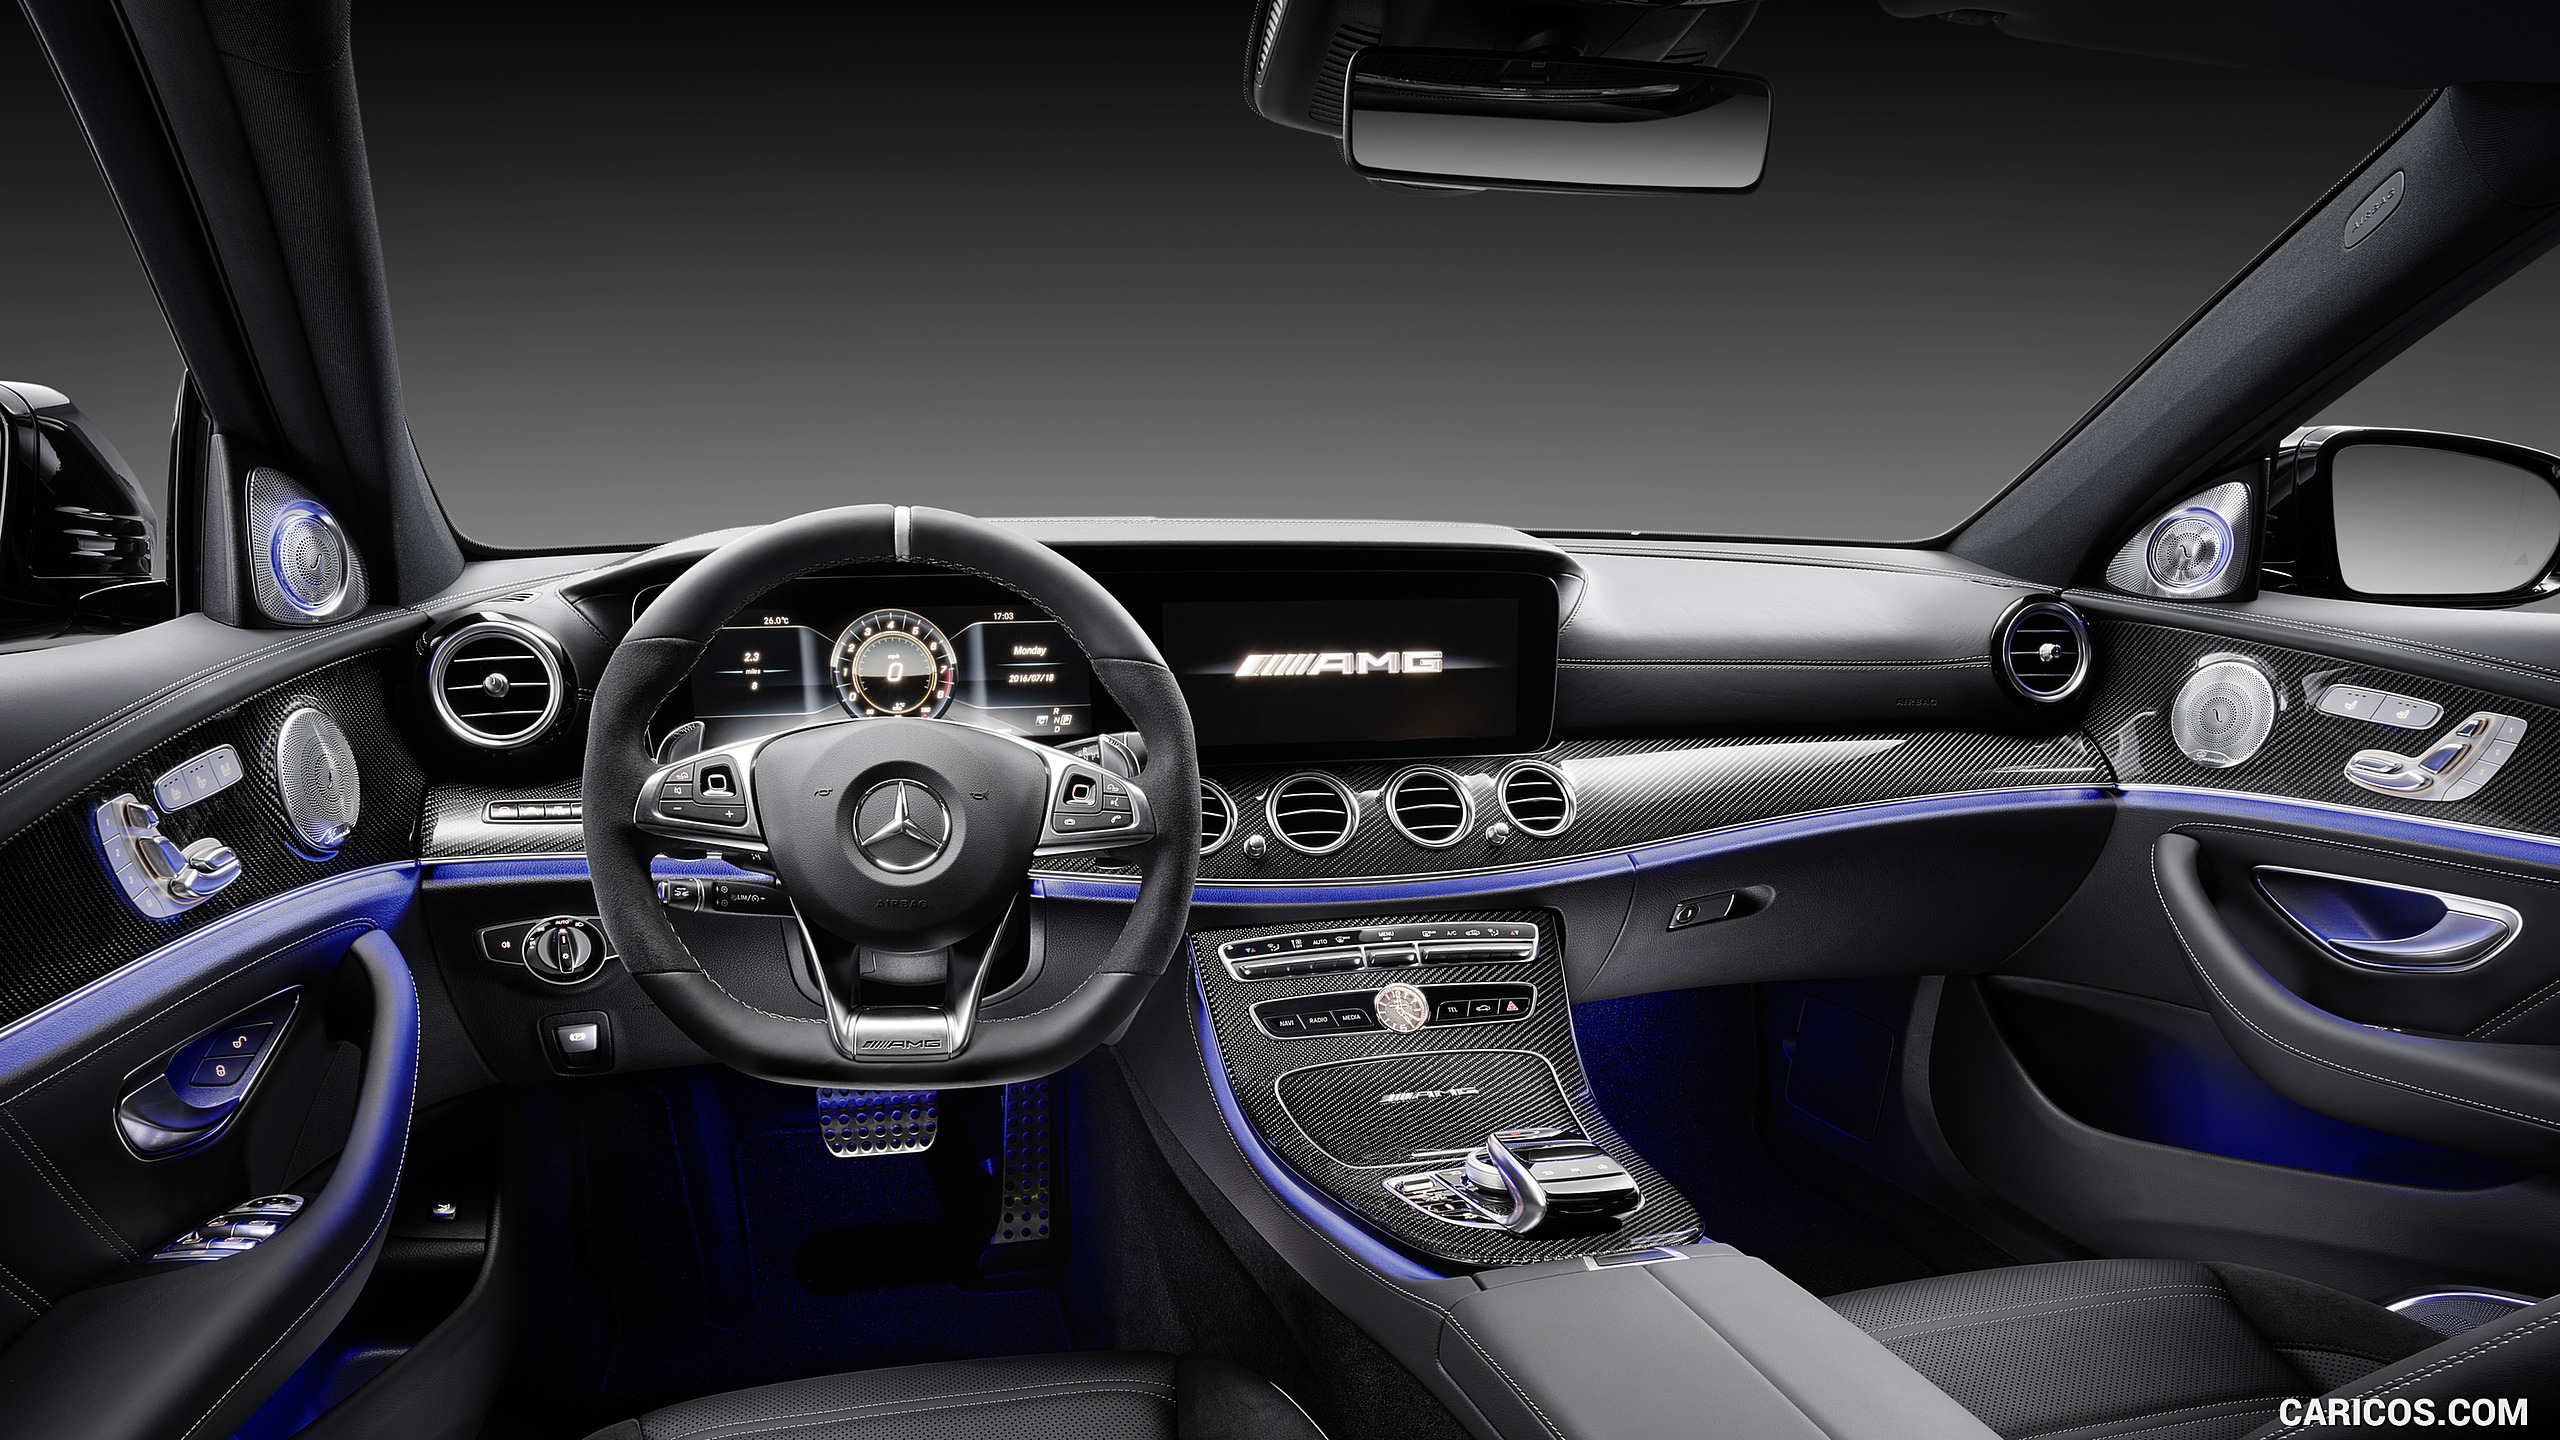 2018 Mercedes-AMG E63 S 4MATIC+ - Interior, Cockpit, #38 of 323